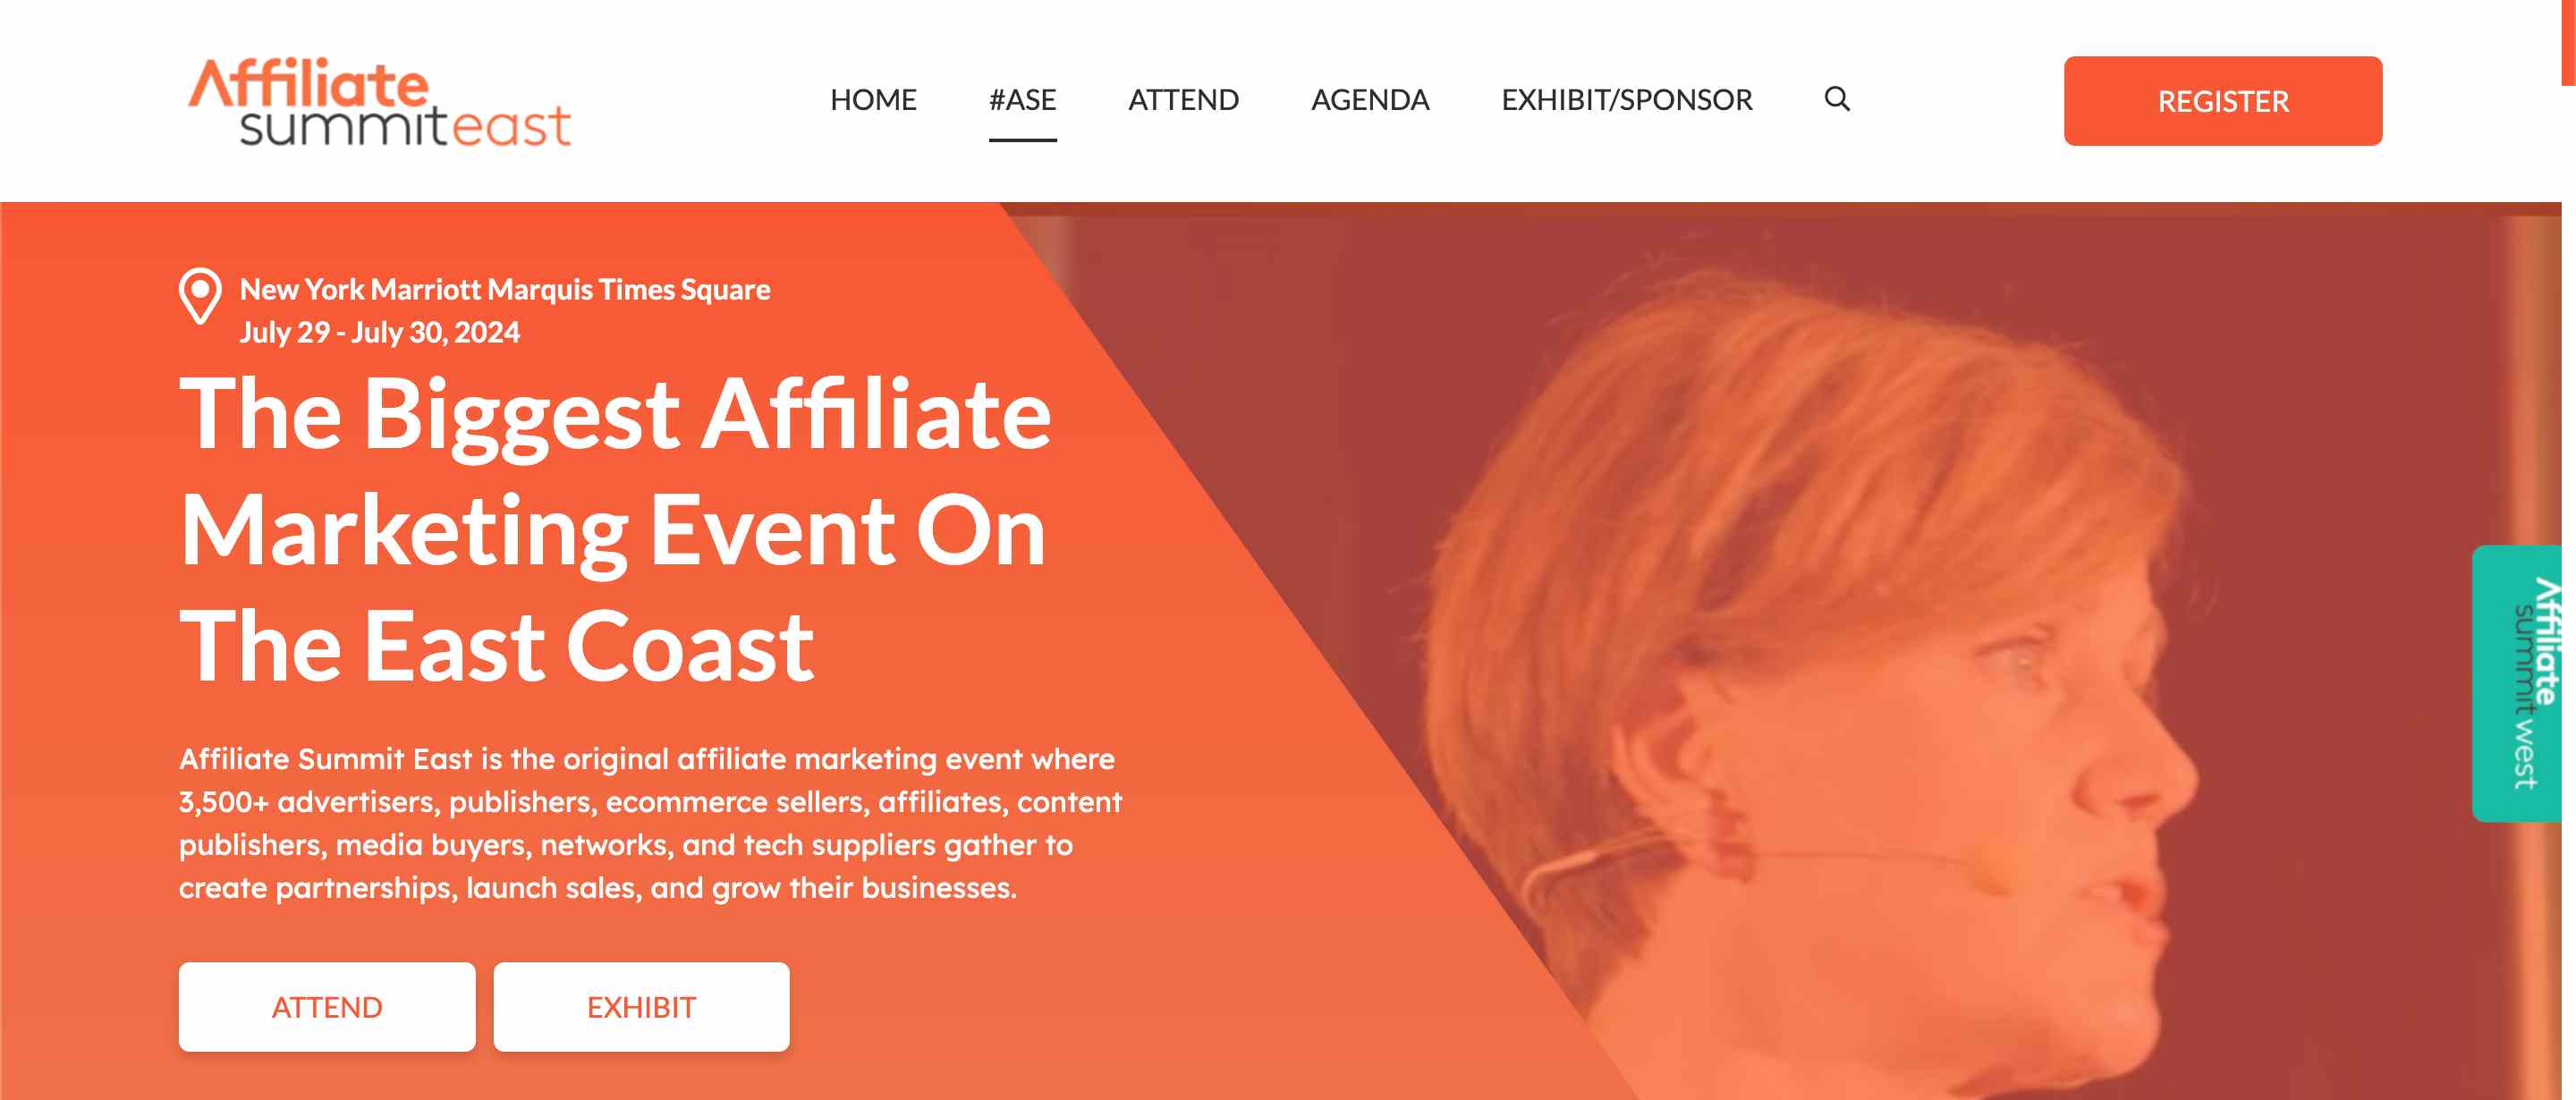 digital marketing conferences - Affiliate Summit East